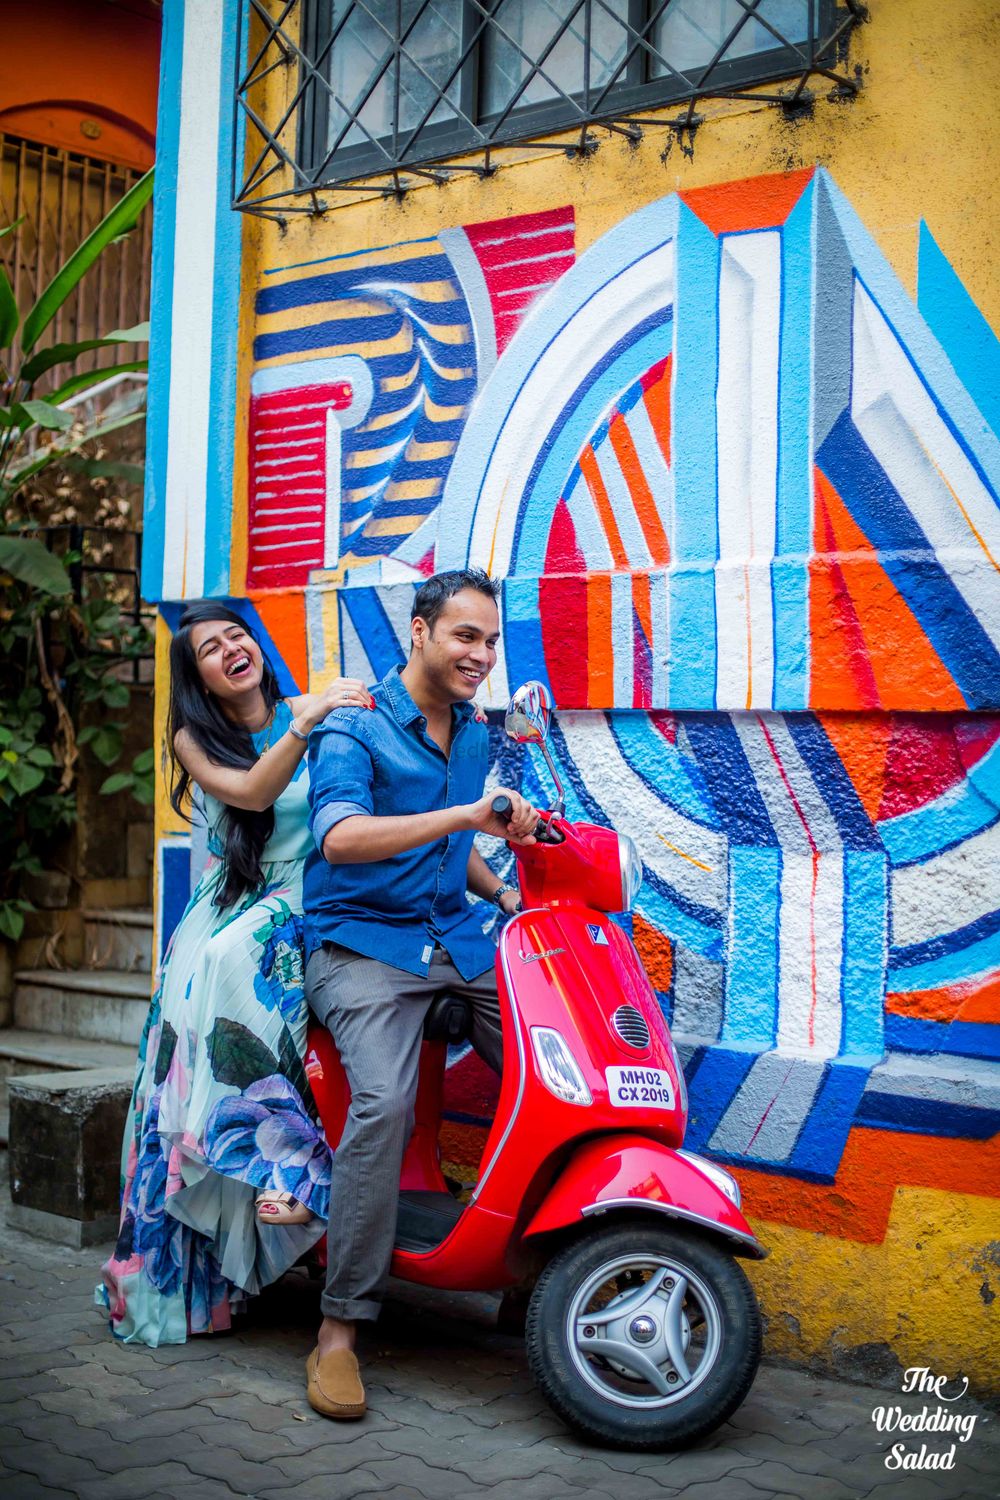 Photo From Mumbai Street Art Pre-Wedding Shoot. - By The Wedding Salad